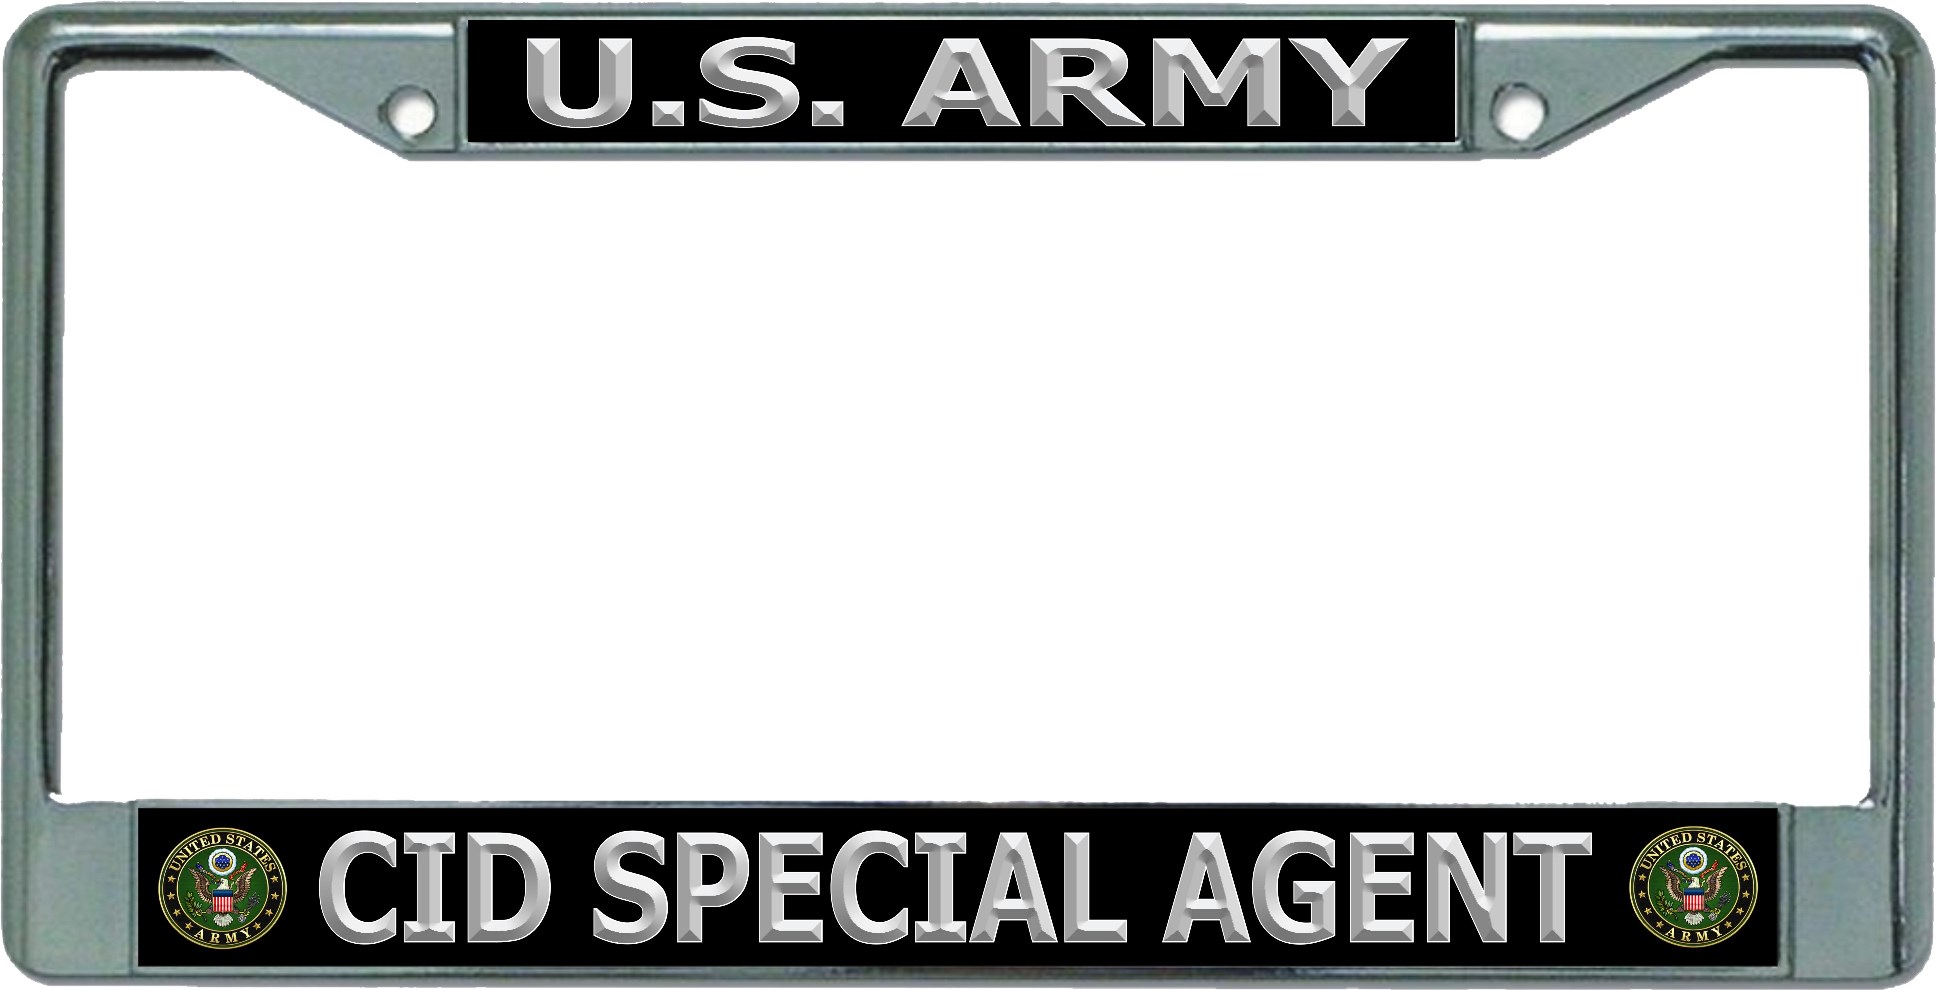 U.S. Army CID Special Agent Chrome License Plate FRAME